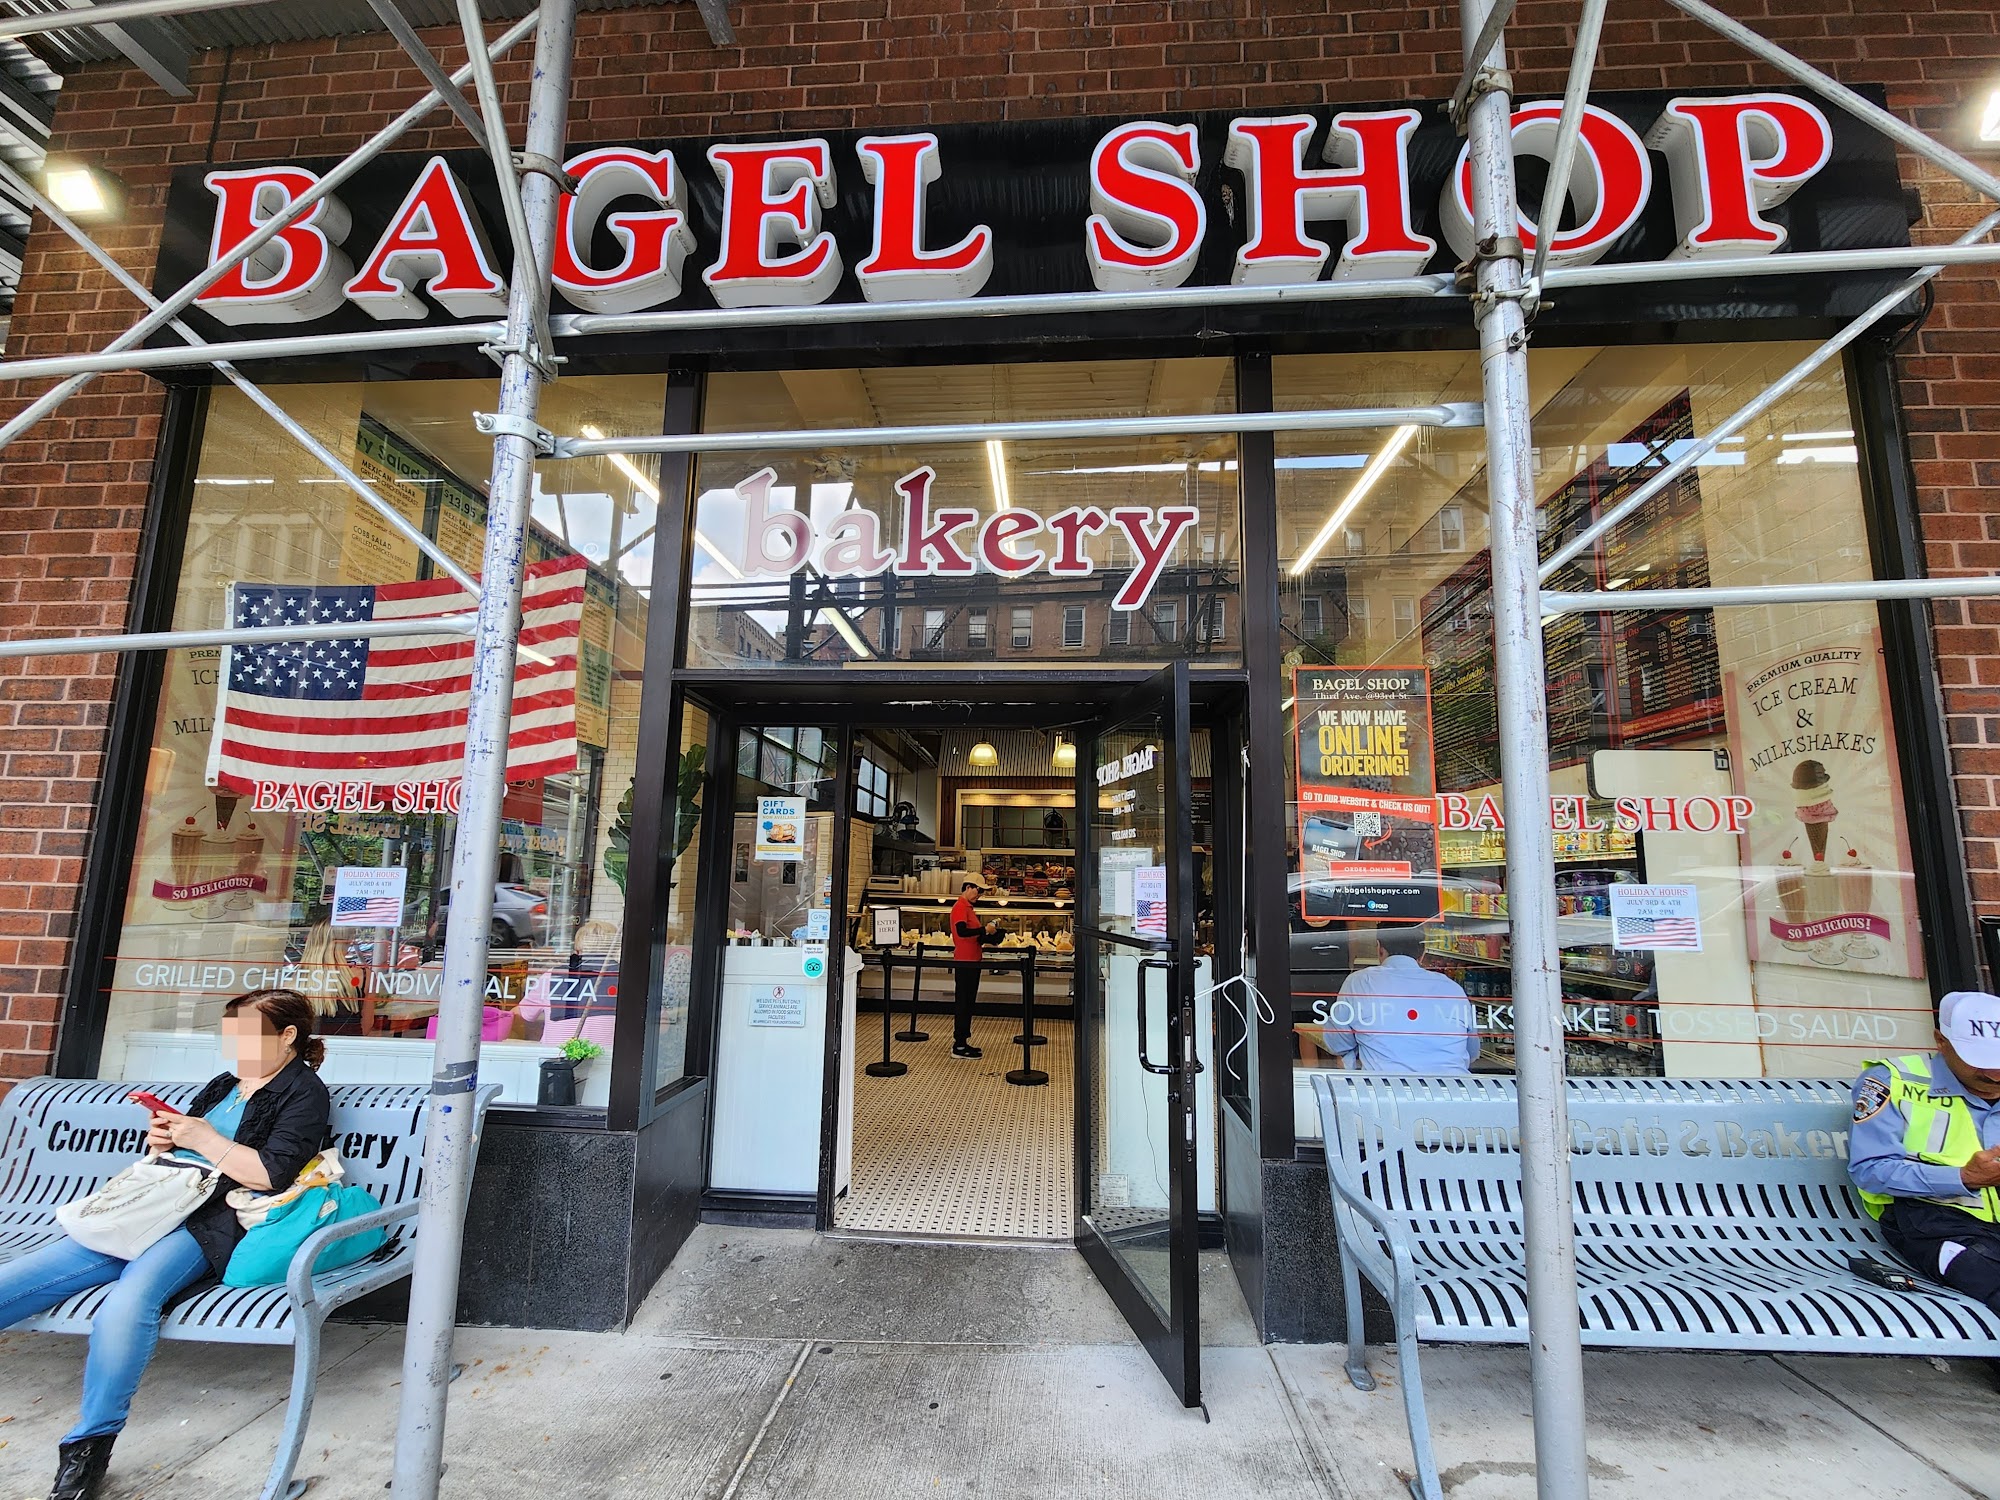 Bagel Shop